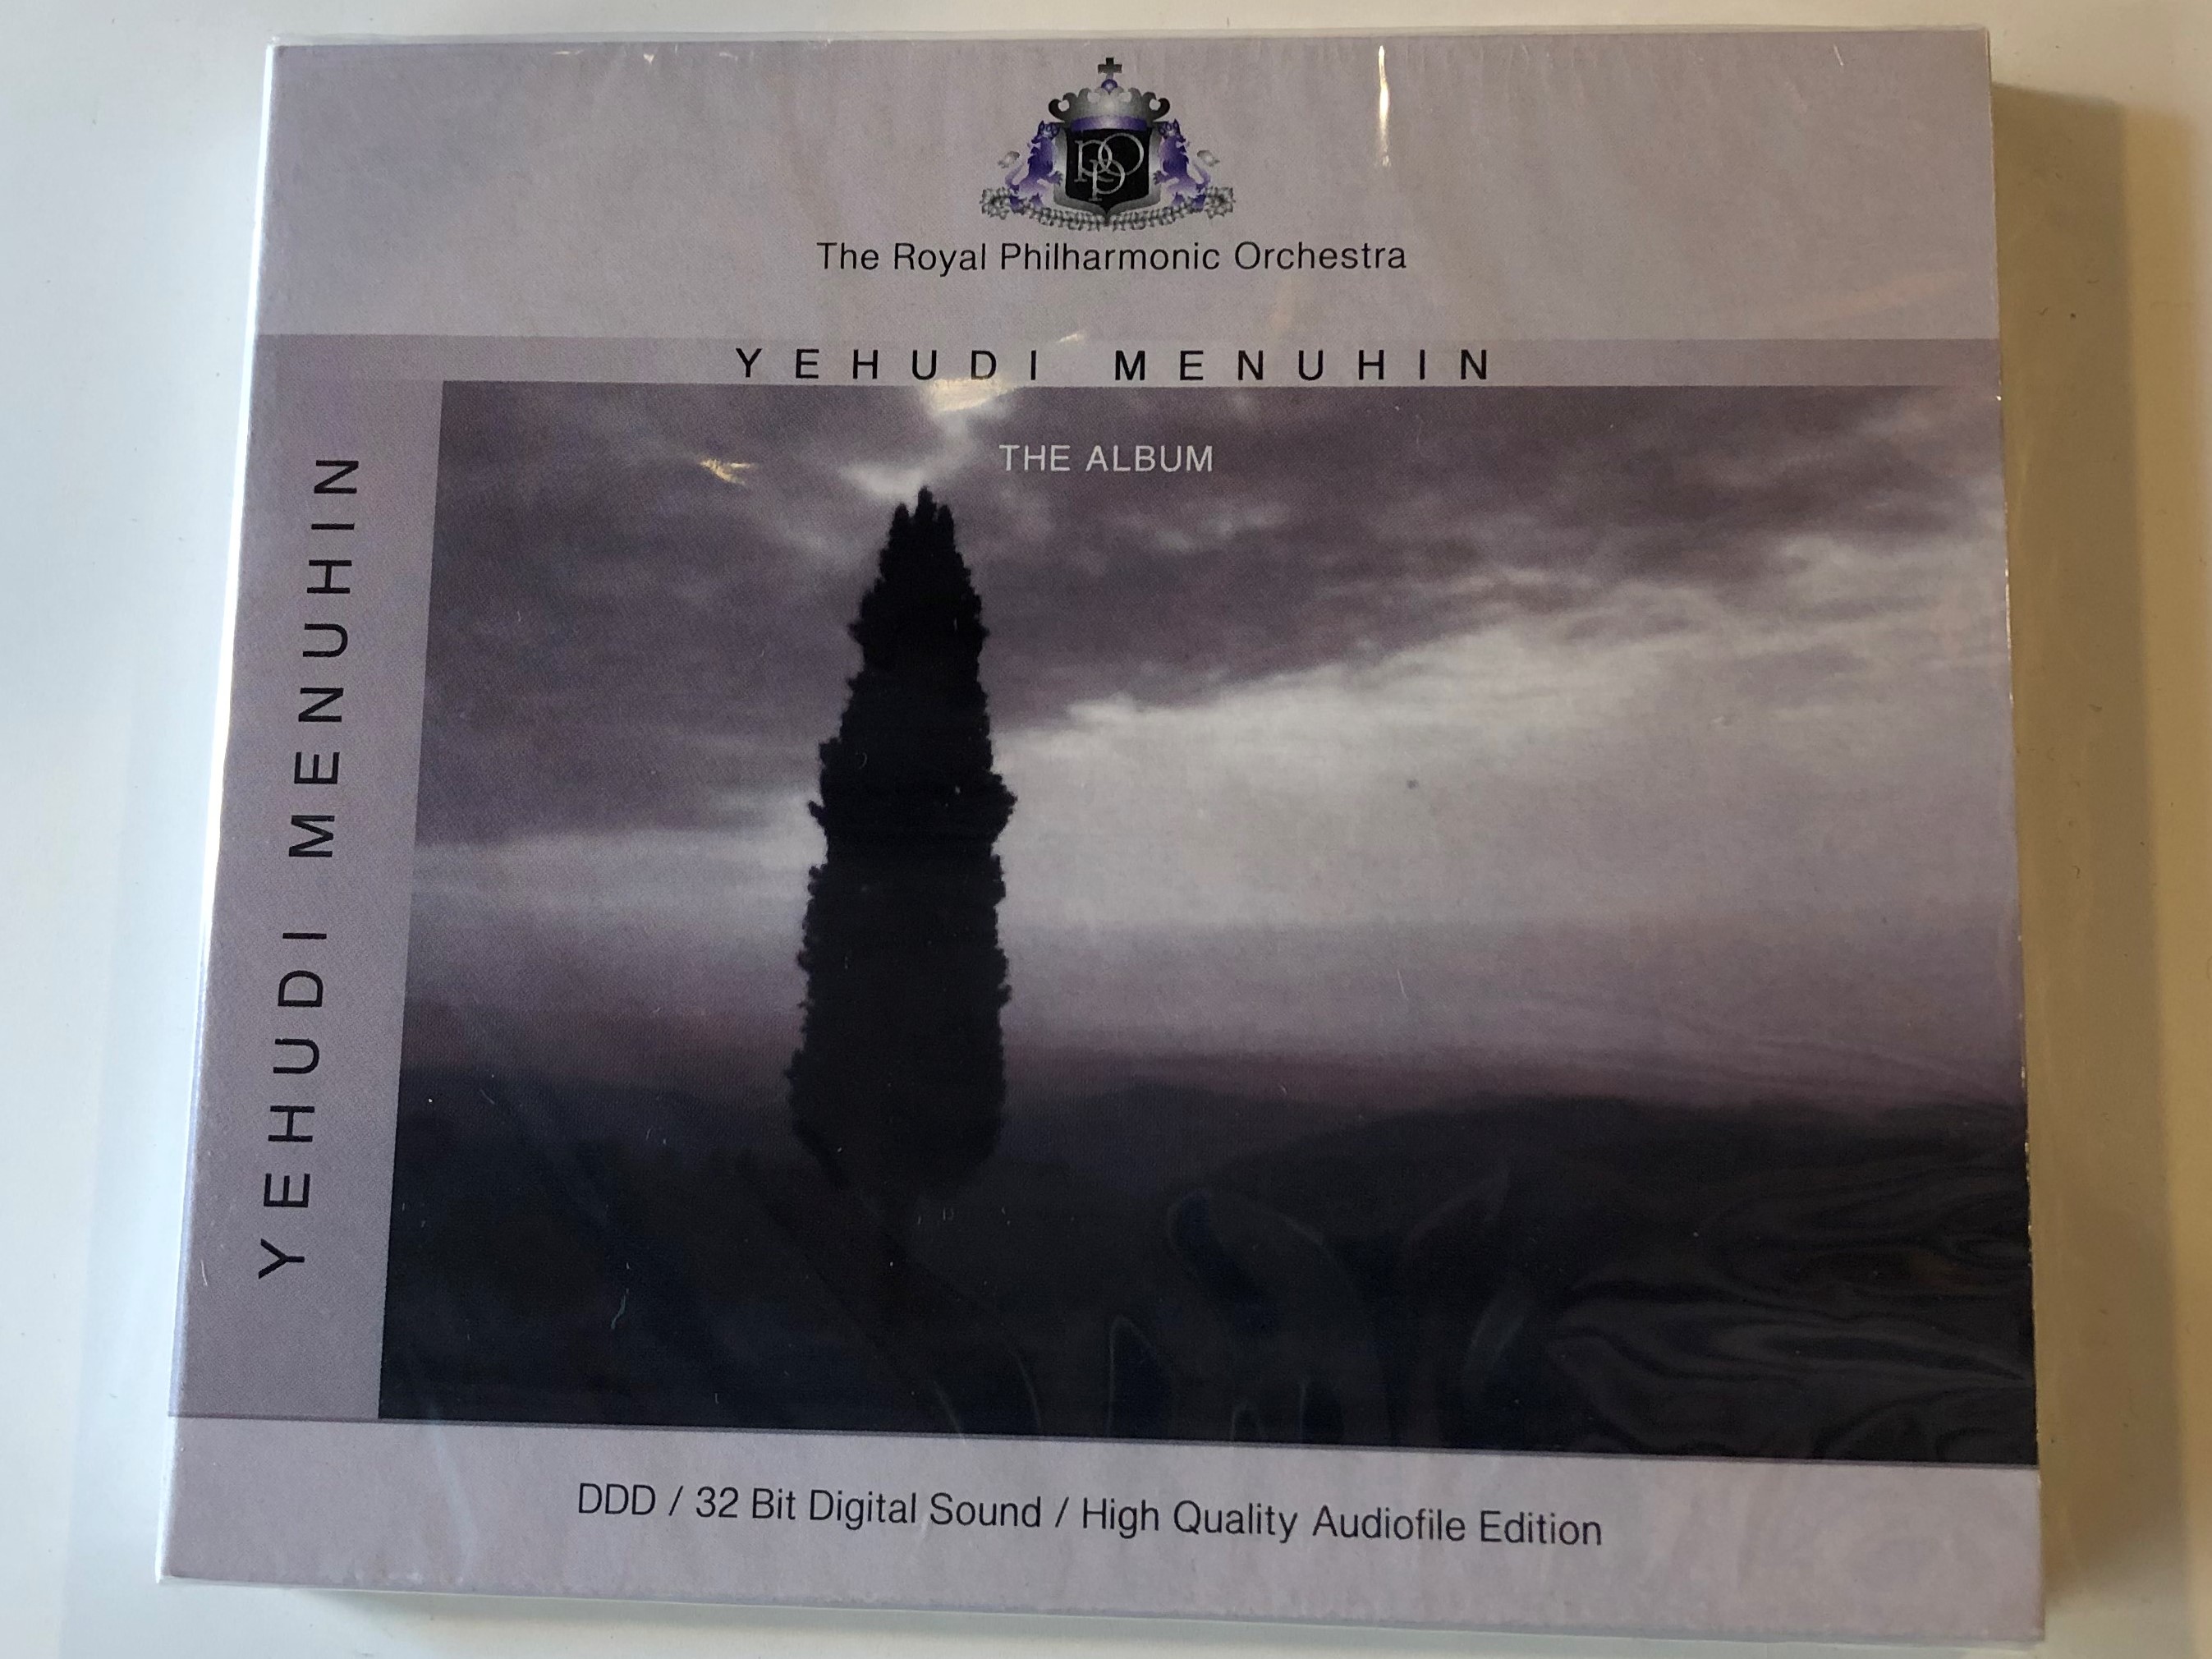 the-royal-philharmonic-orchestra-yehudi-menuhin-the-album-ddd-32-bit-digital-sound-high-quality-audiofile-edition-membran-audio-cd-204487-201-1-.jpg